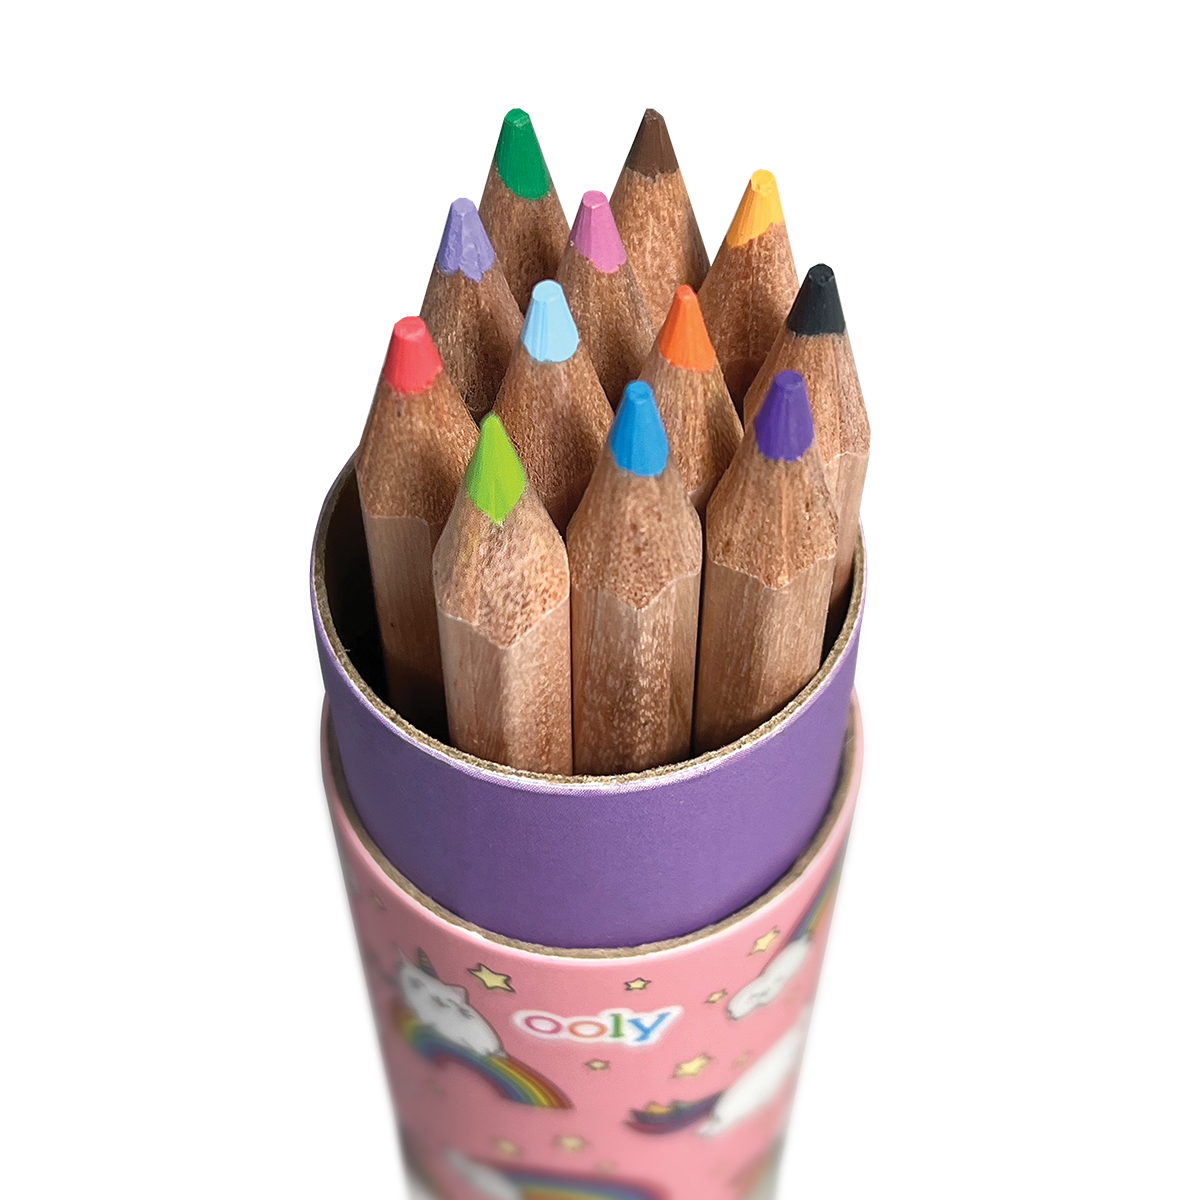 Draw 'n' Doodle Mini Colored Pencils + Sharpener - Set of 12